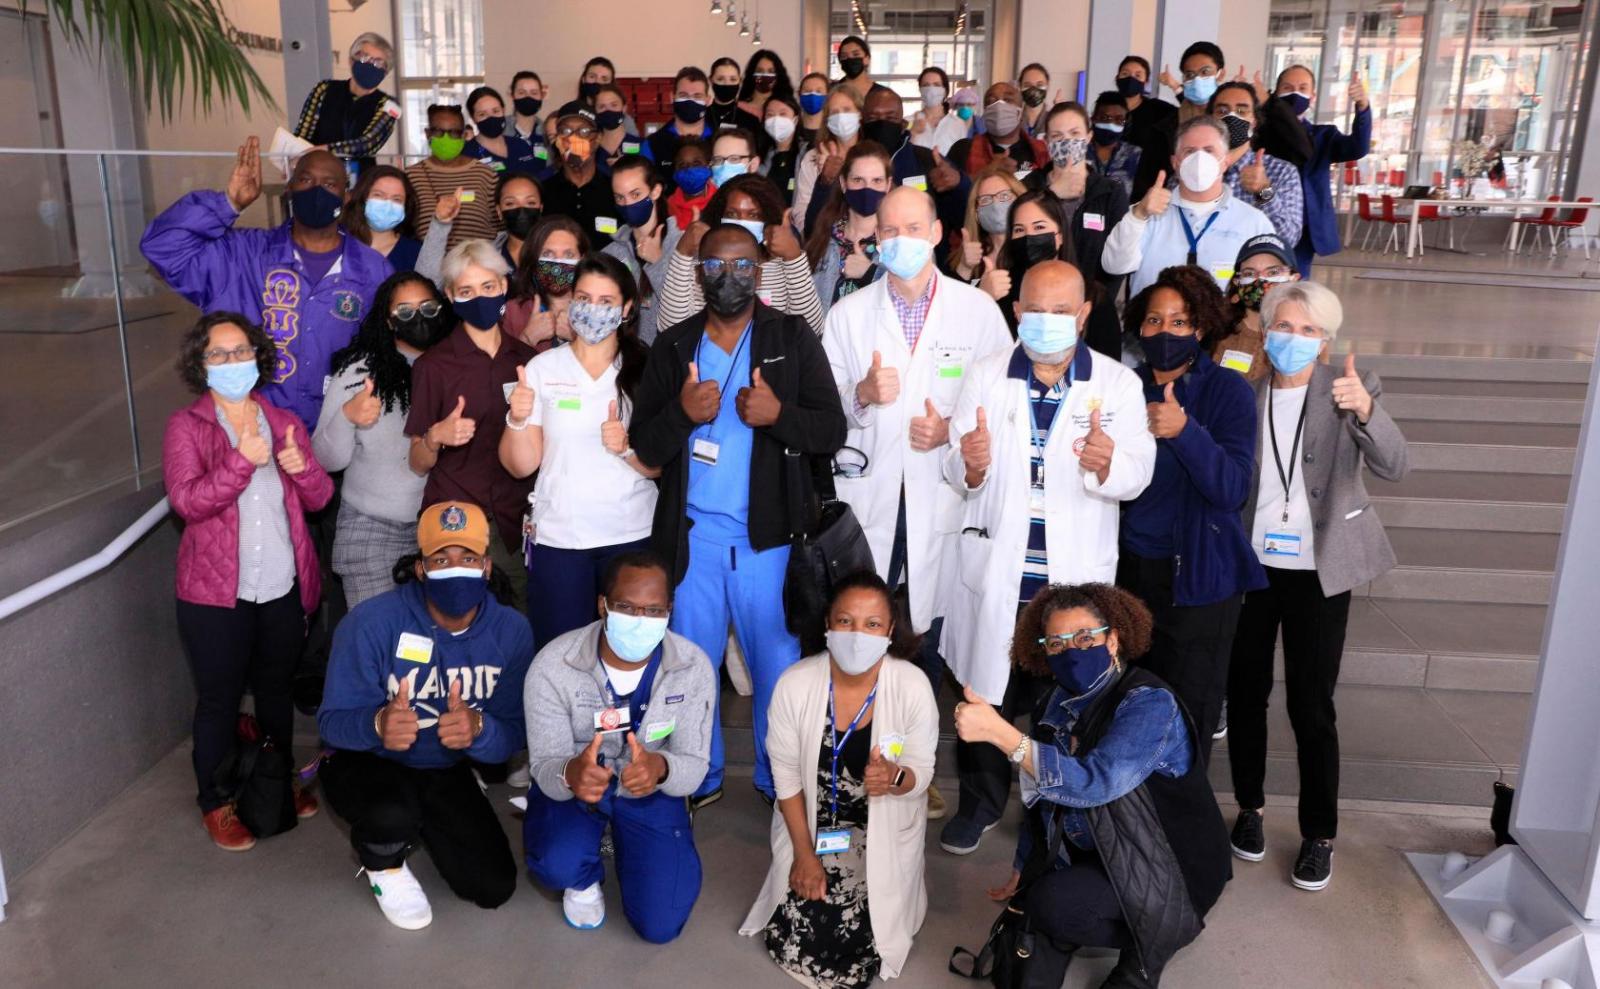 Volunteers at Columbia University Wellness Center's Pop-Up COVID vaccine site